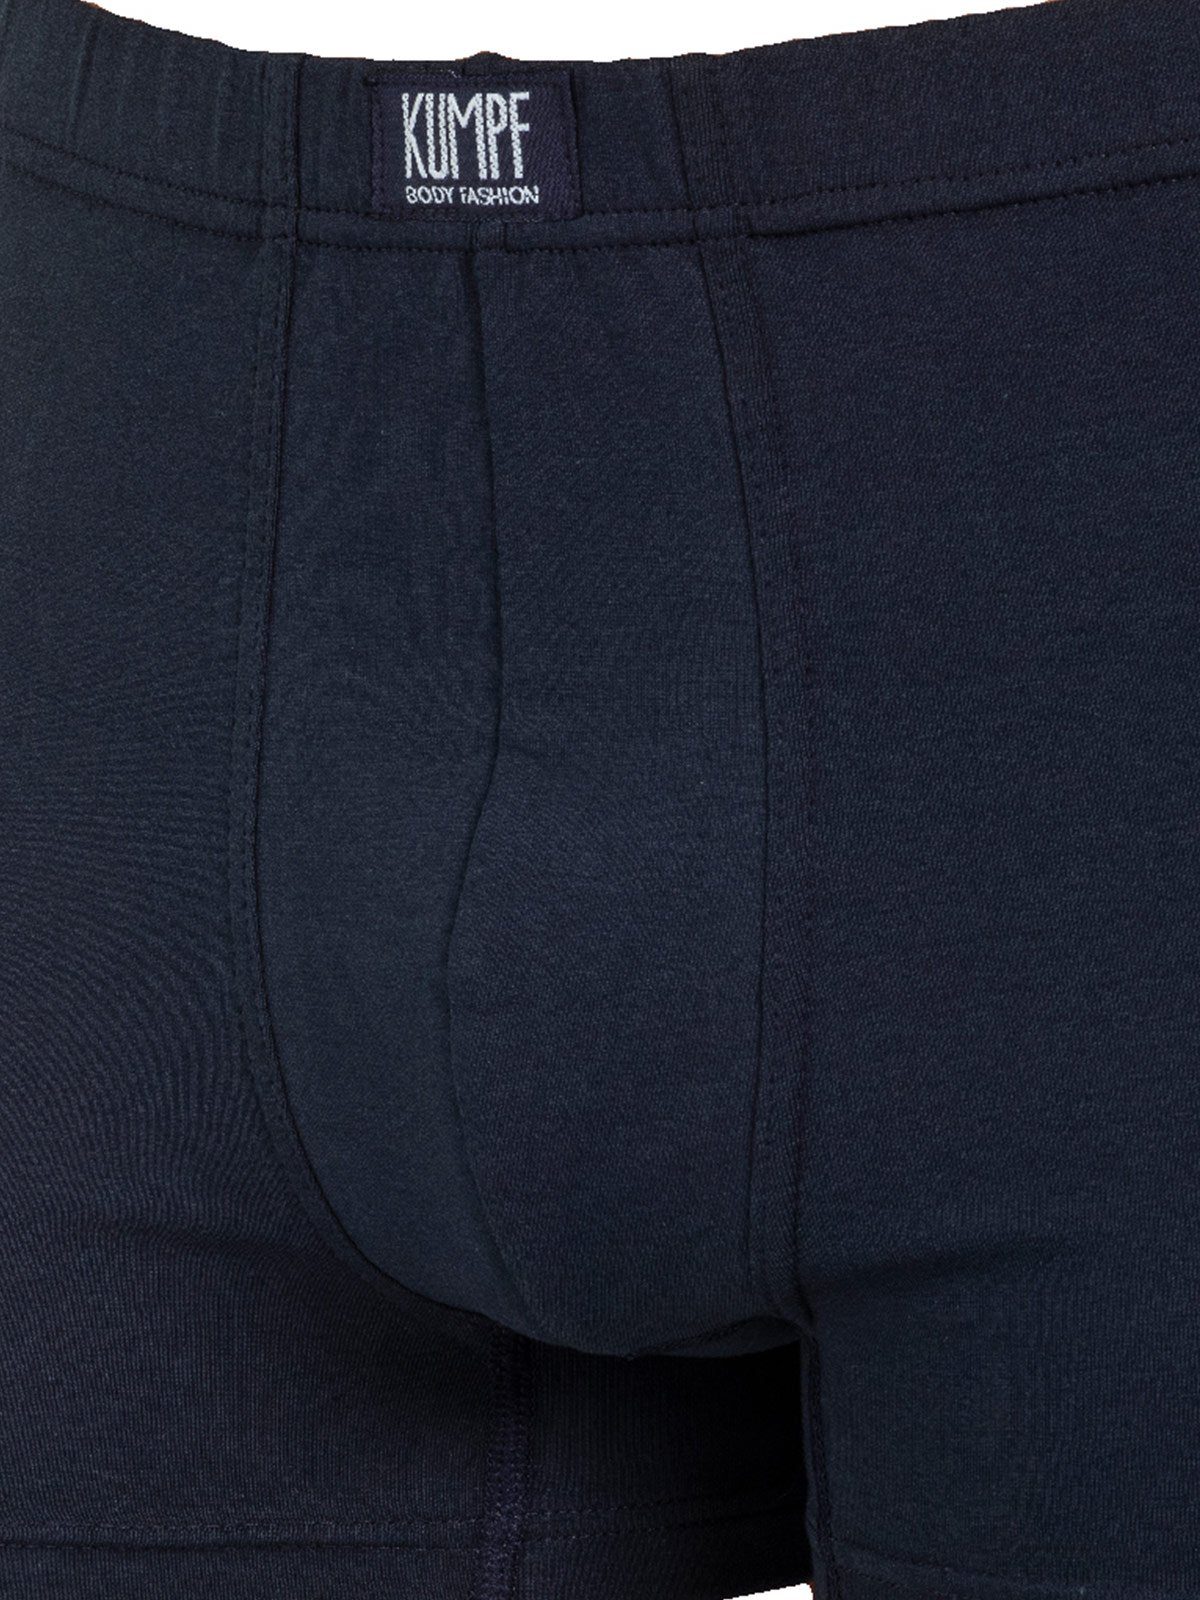 1-St) Retro Pants hohe Bio Herren KUMPF Pants (Stück, Markenqualität Cotton navy